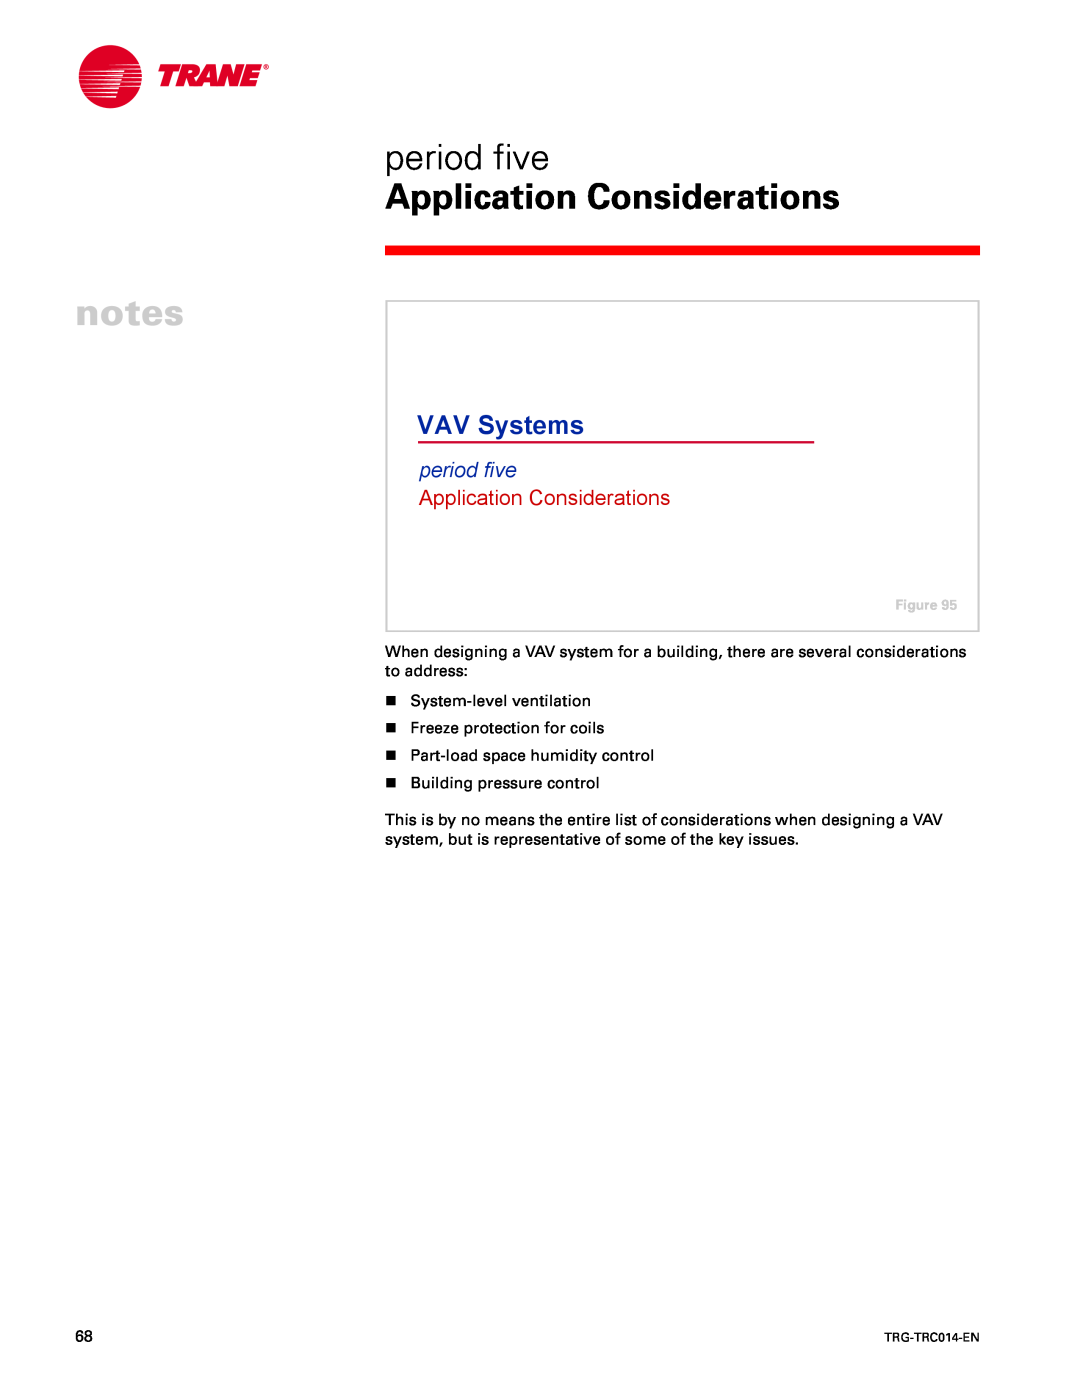 Trane TRG-TRC014-EN manual period five, Application Considerations, VAV Systems 